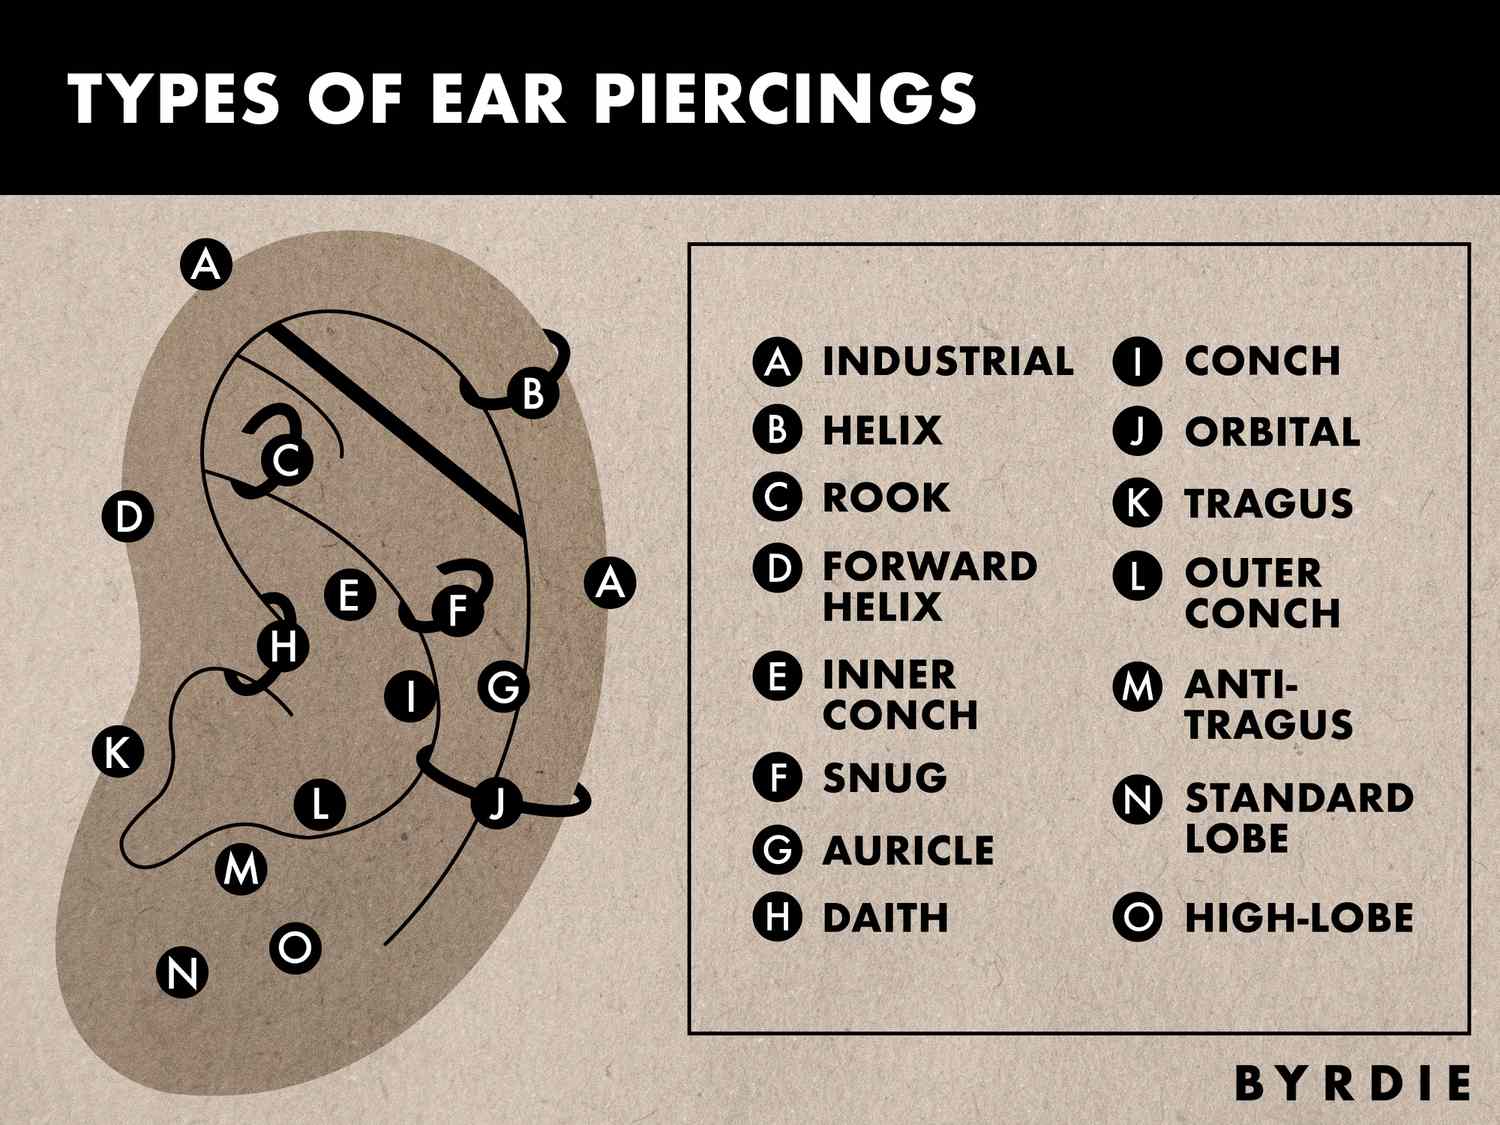 Tabela de tipos de piercings nas orelhas